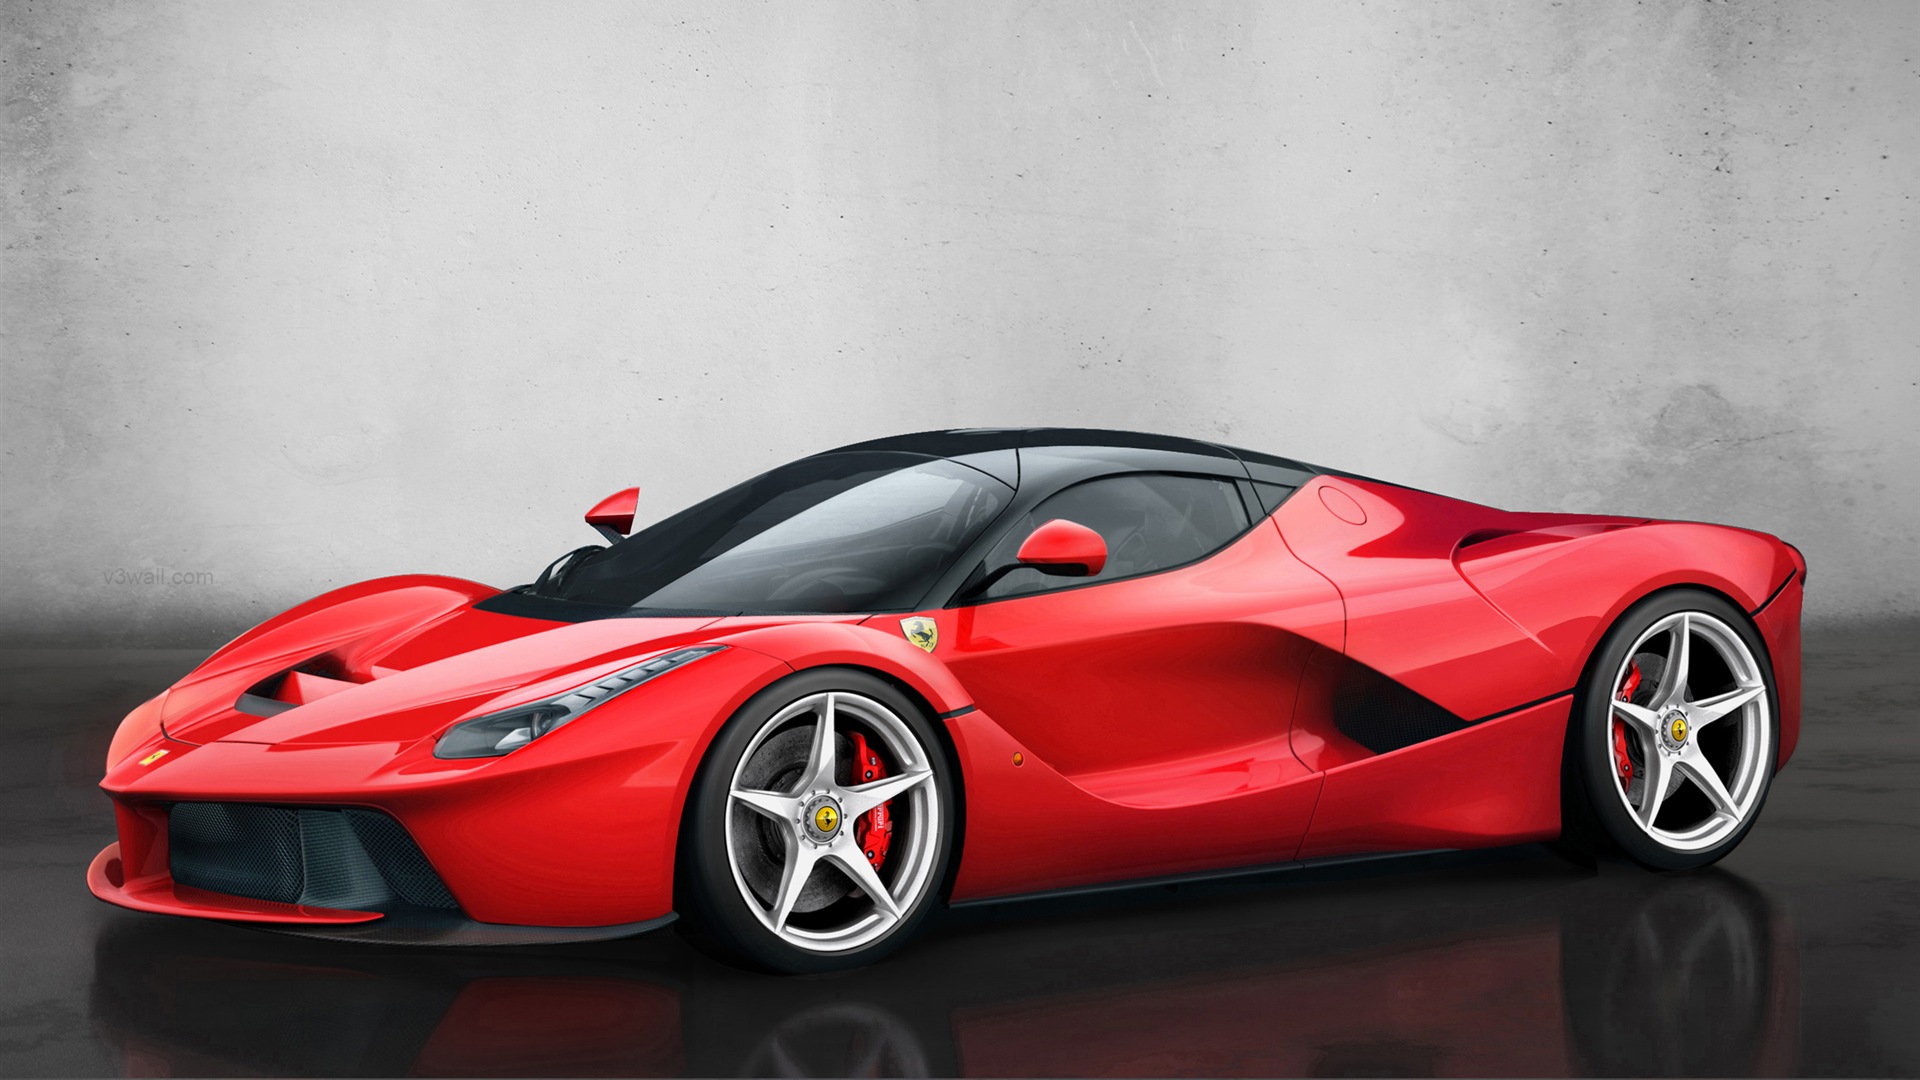 2013 Ferrari LaFerrari red supercar HD Wallpaper #7 - 1920x1080